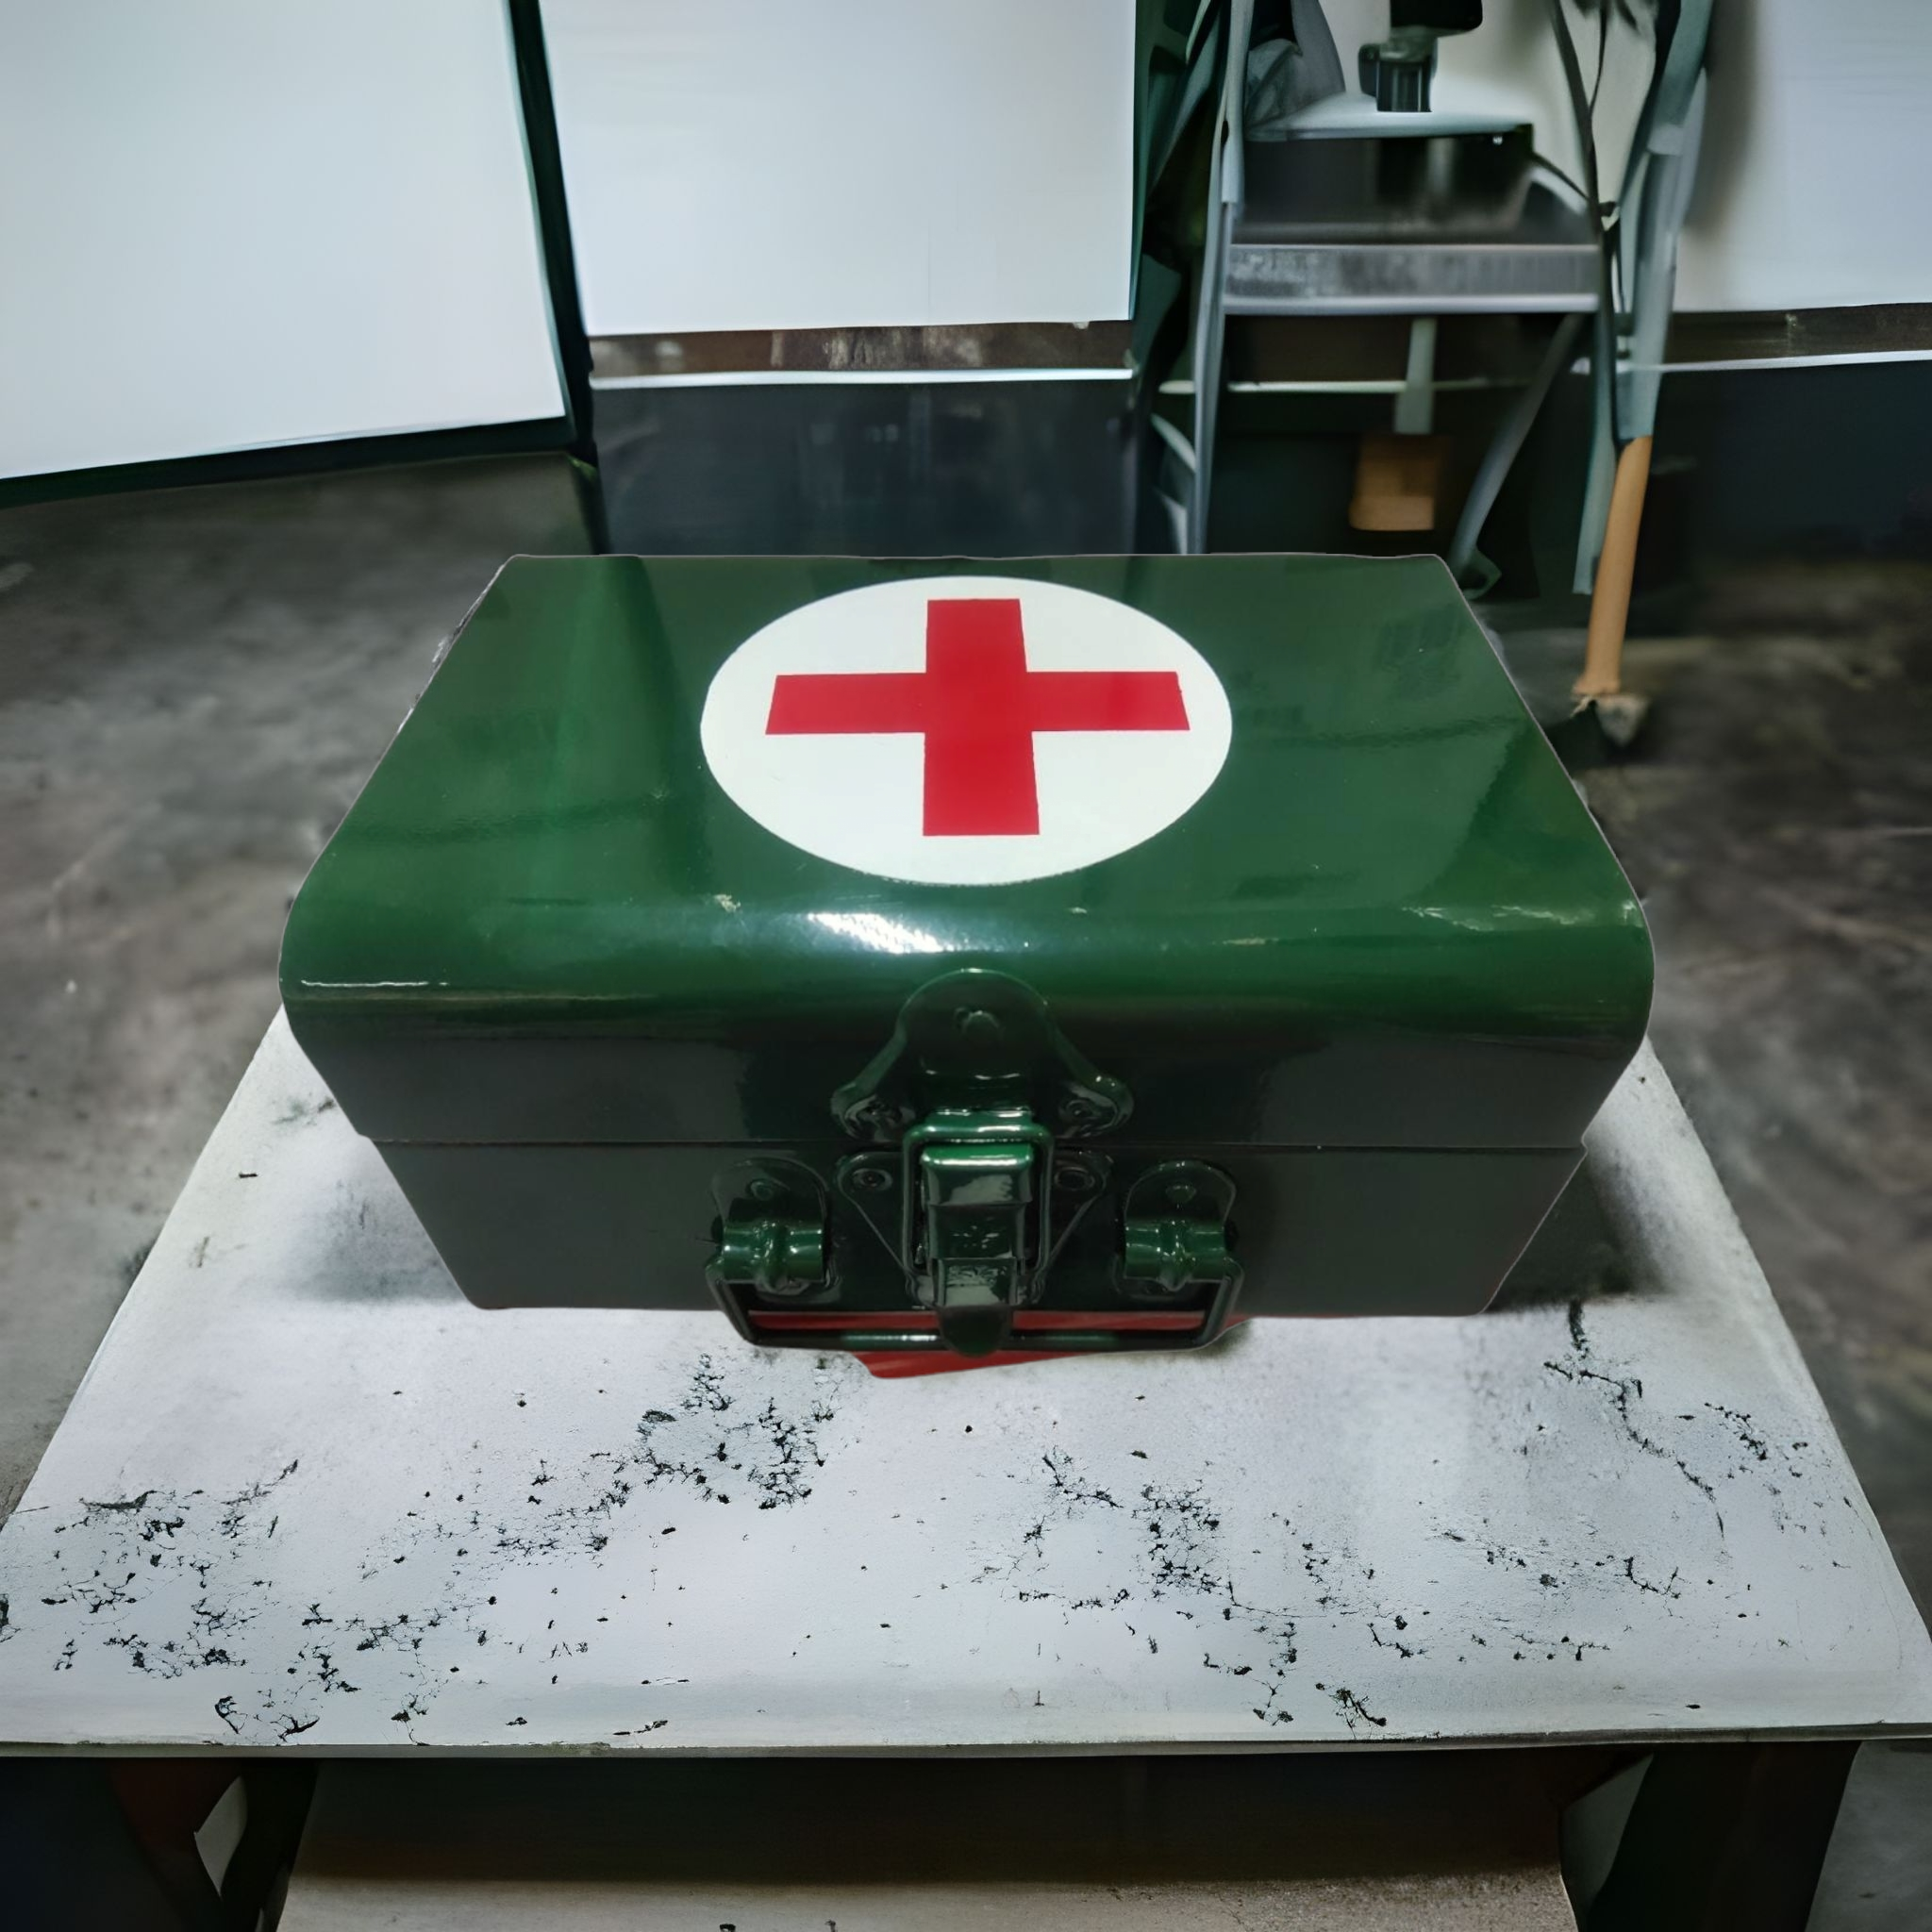 Vintage First Aid Box Galvanised - Rectangular